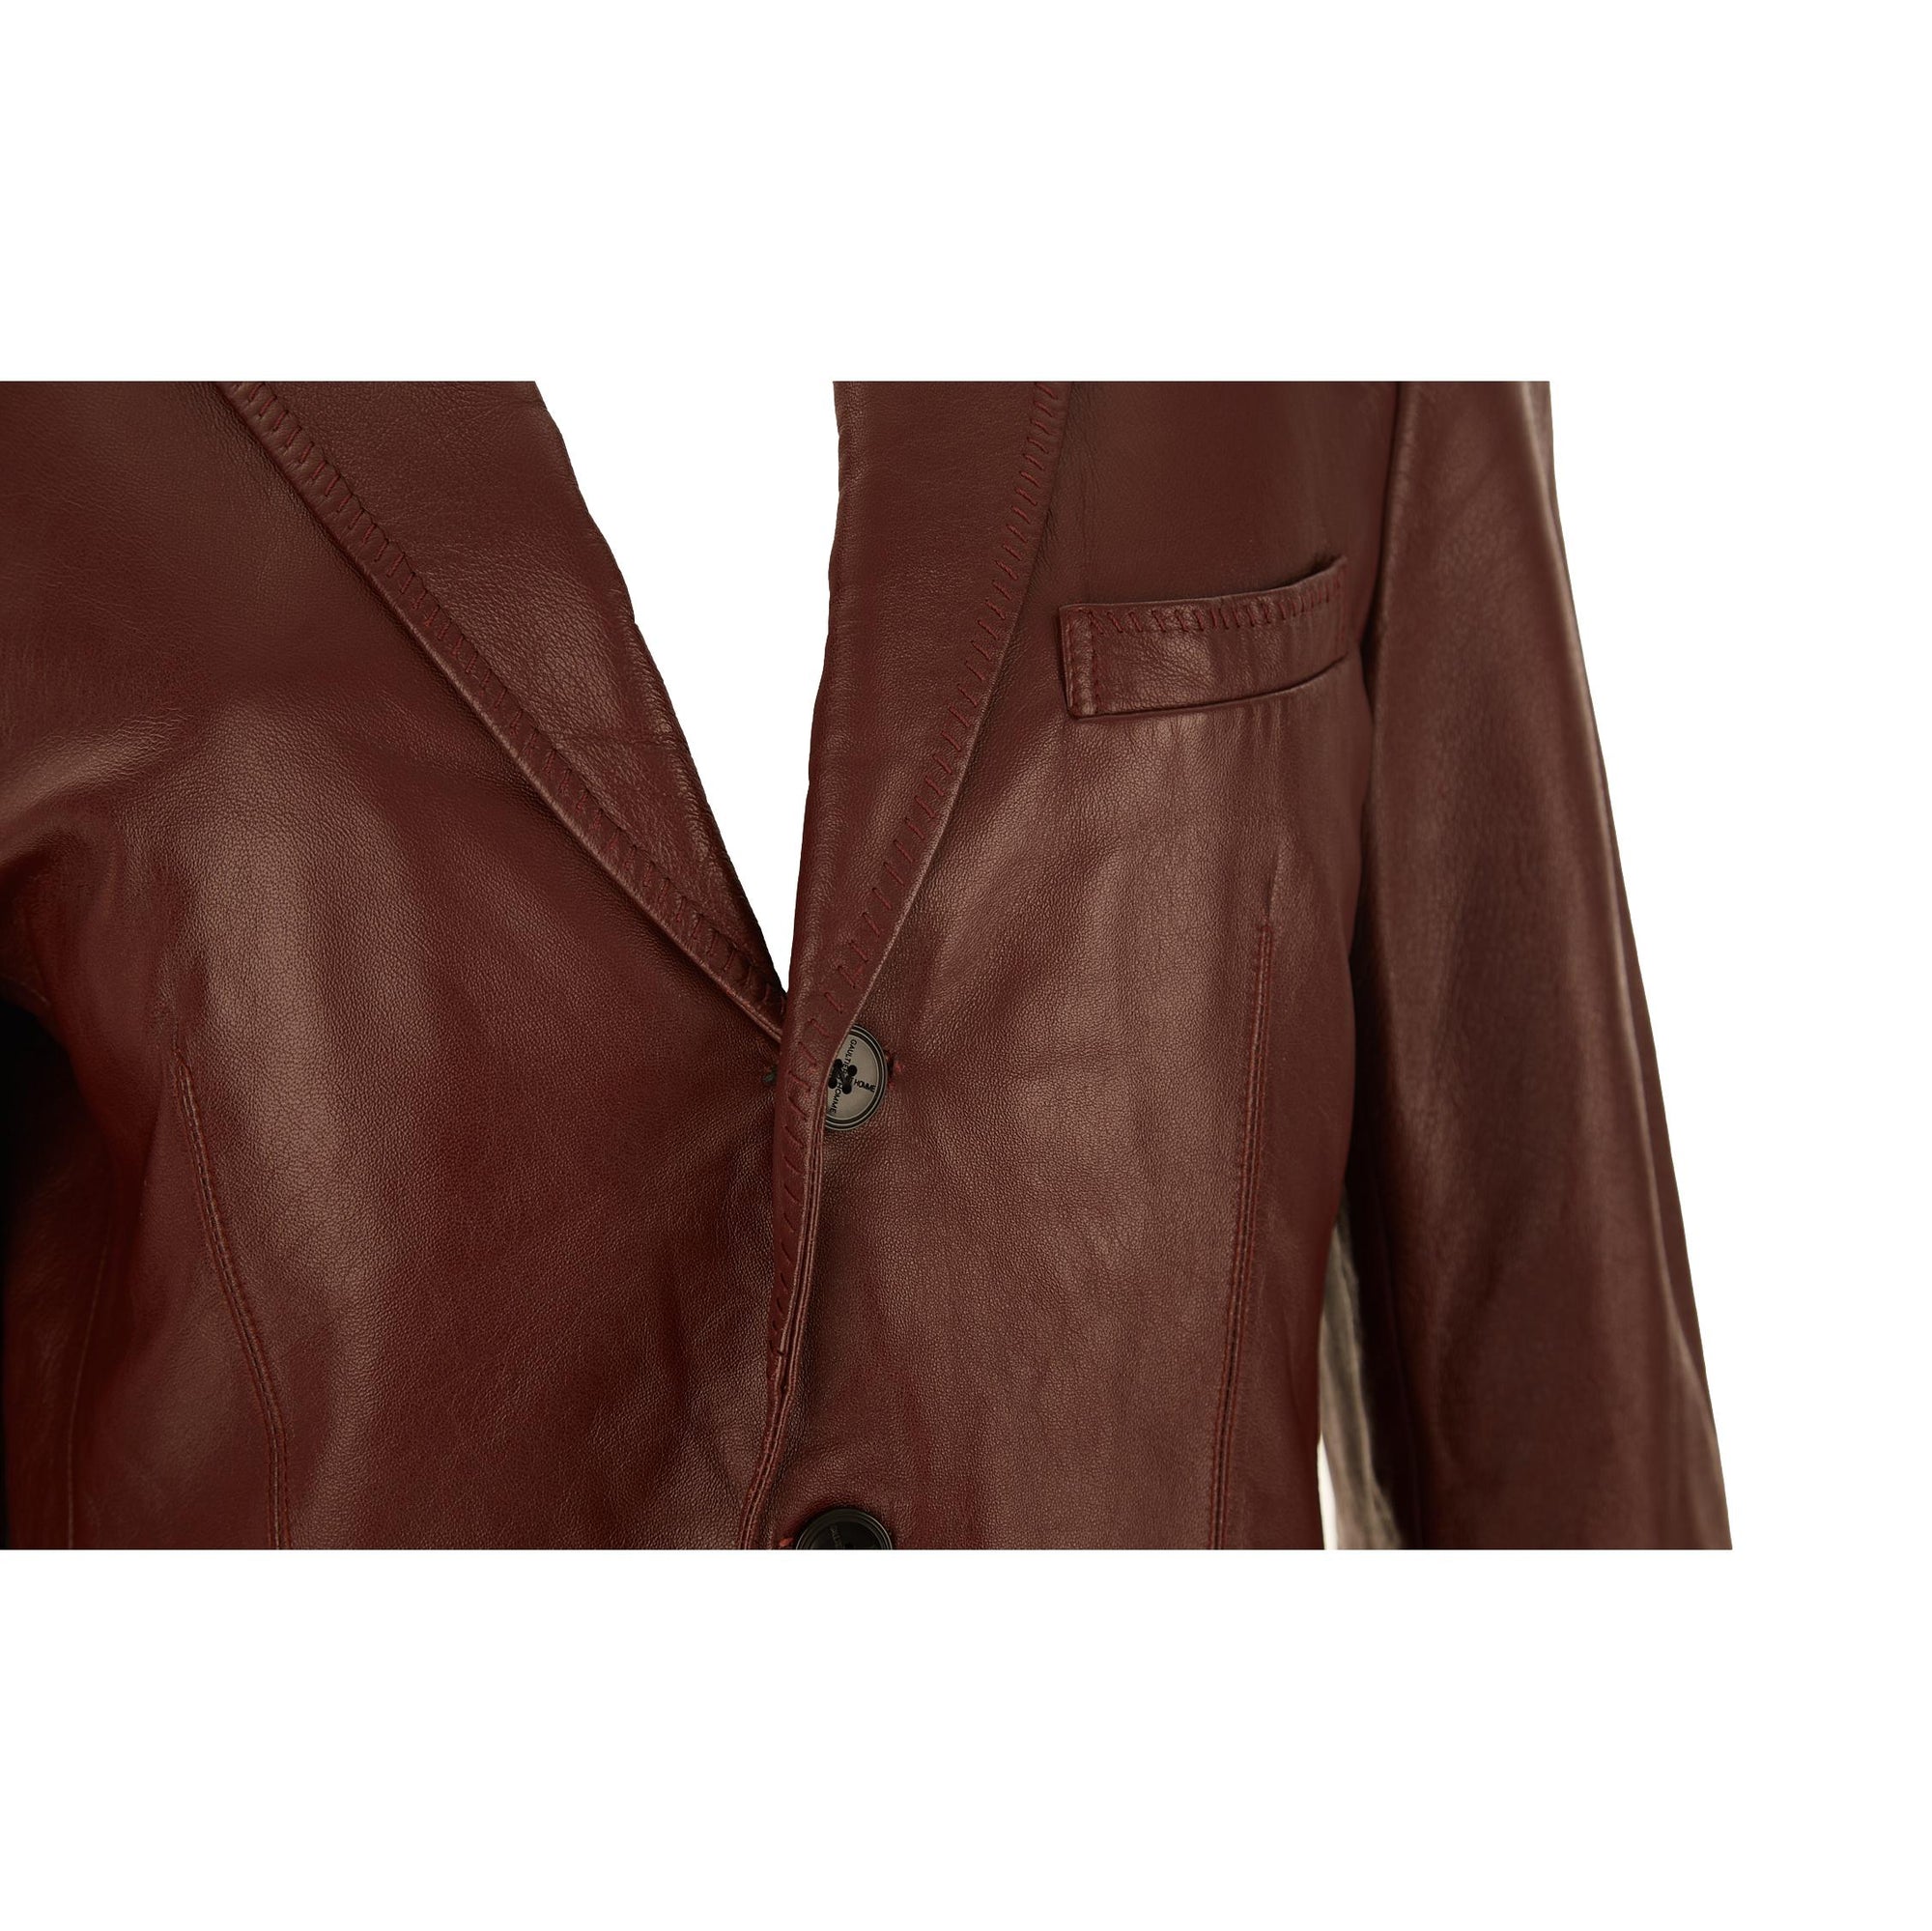 Jean Paul Gaultier Brown Leather Jacket